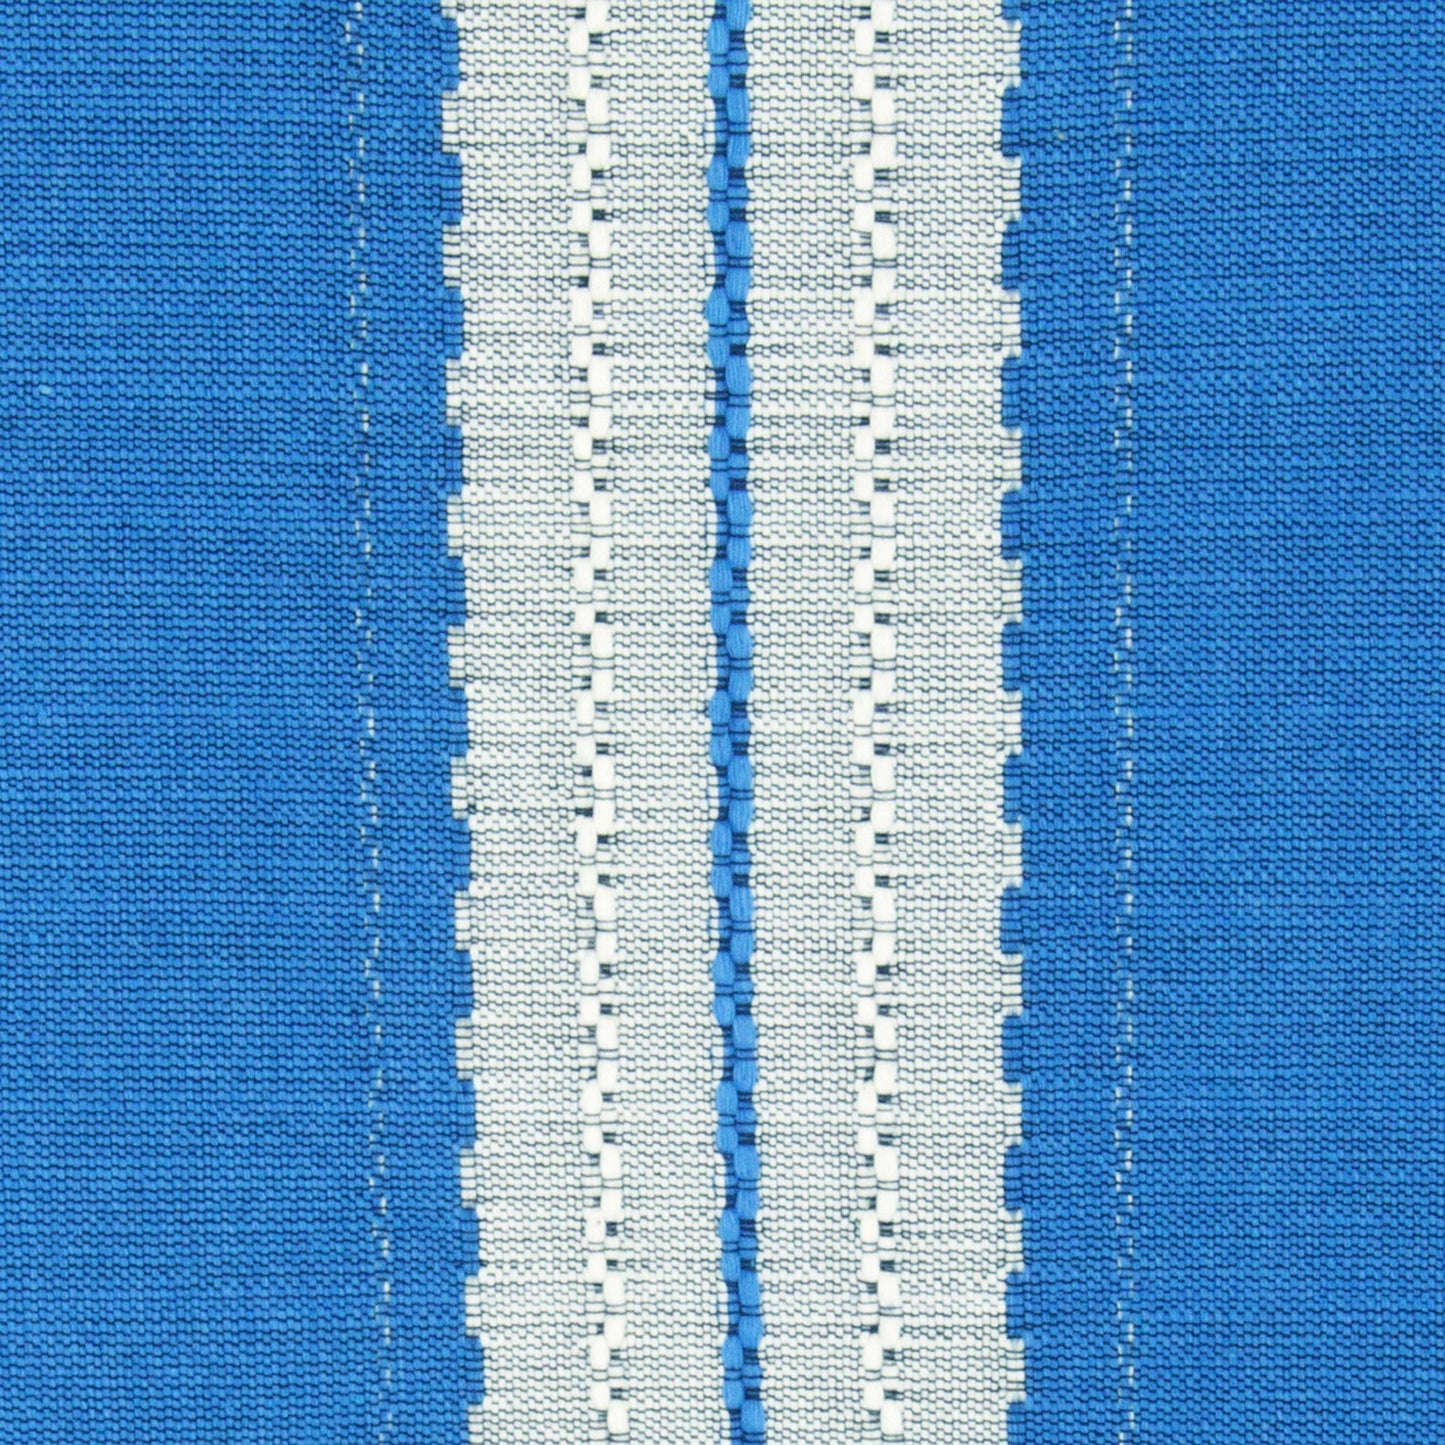 Oaxaca Ocean Zapotec Cotton Bedspread Quilt